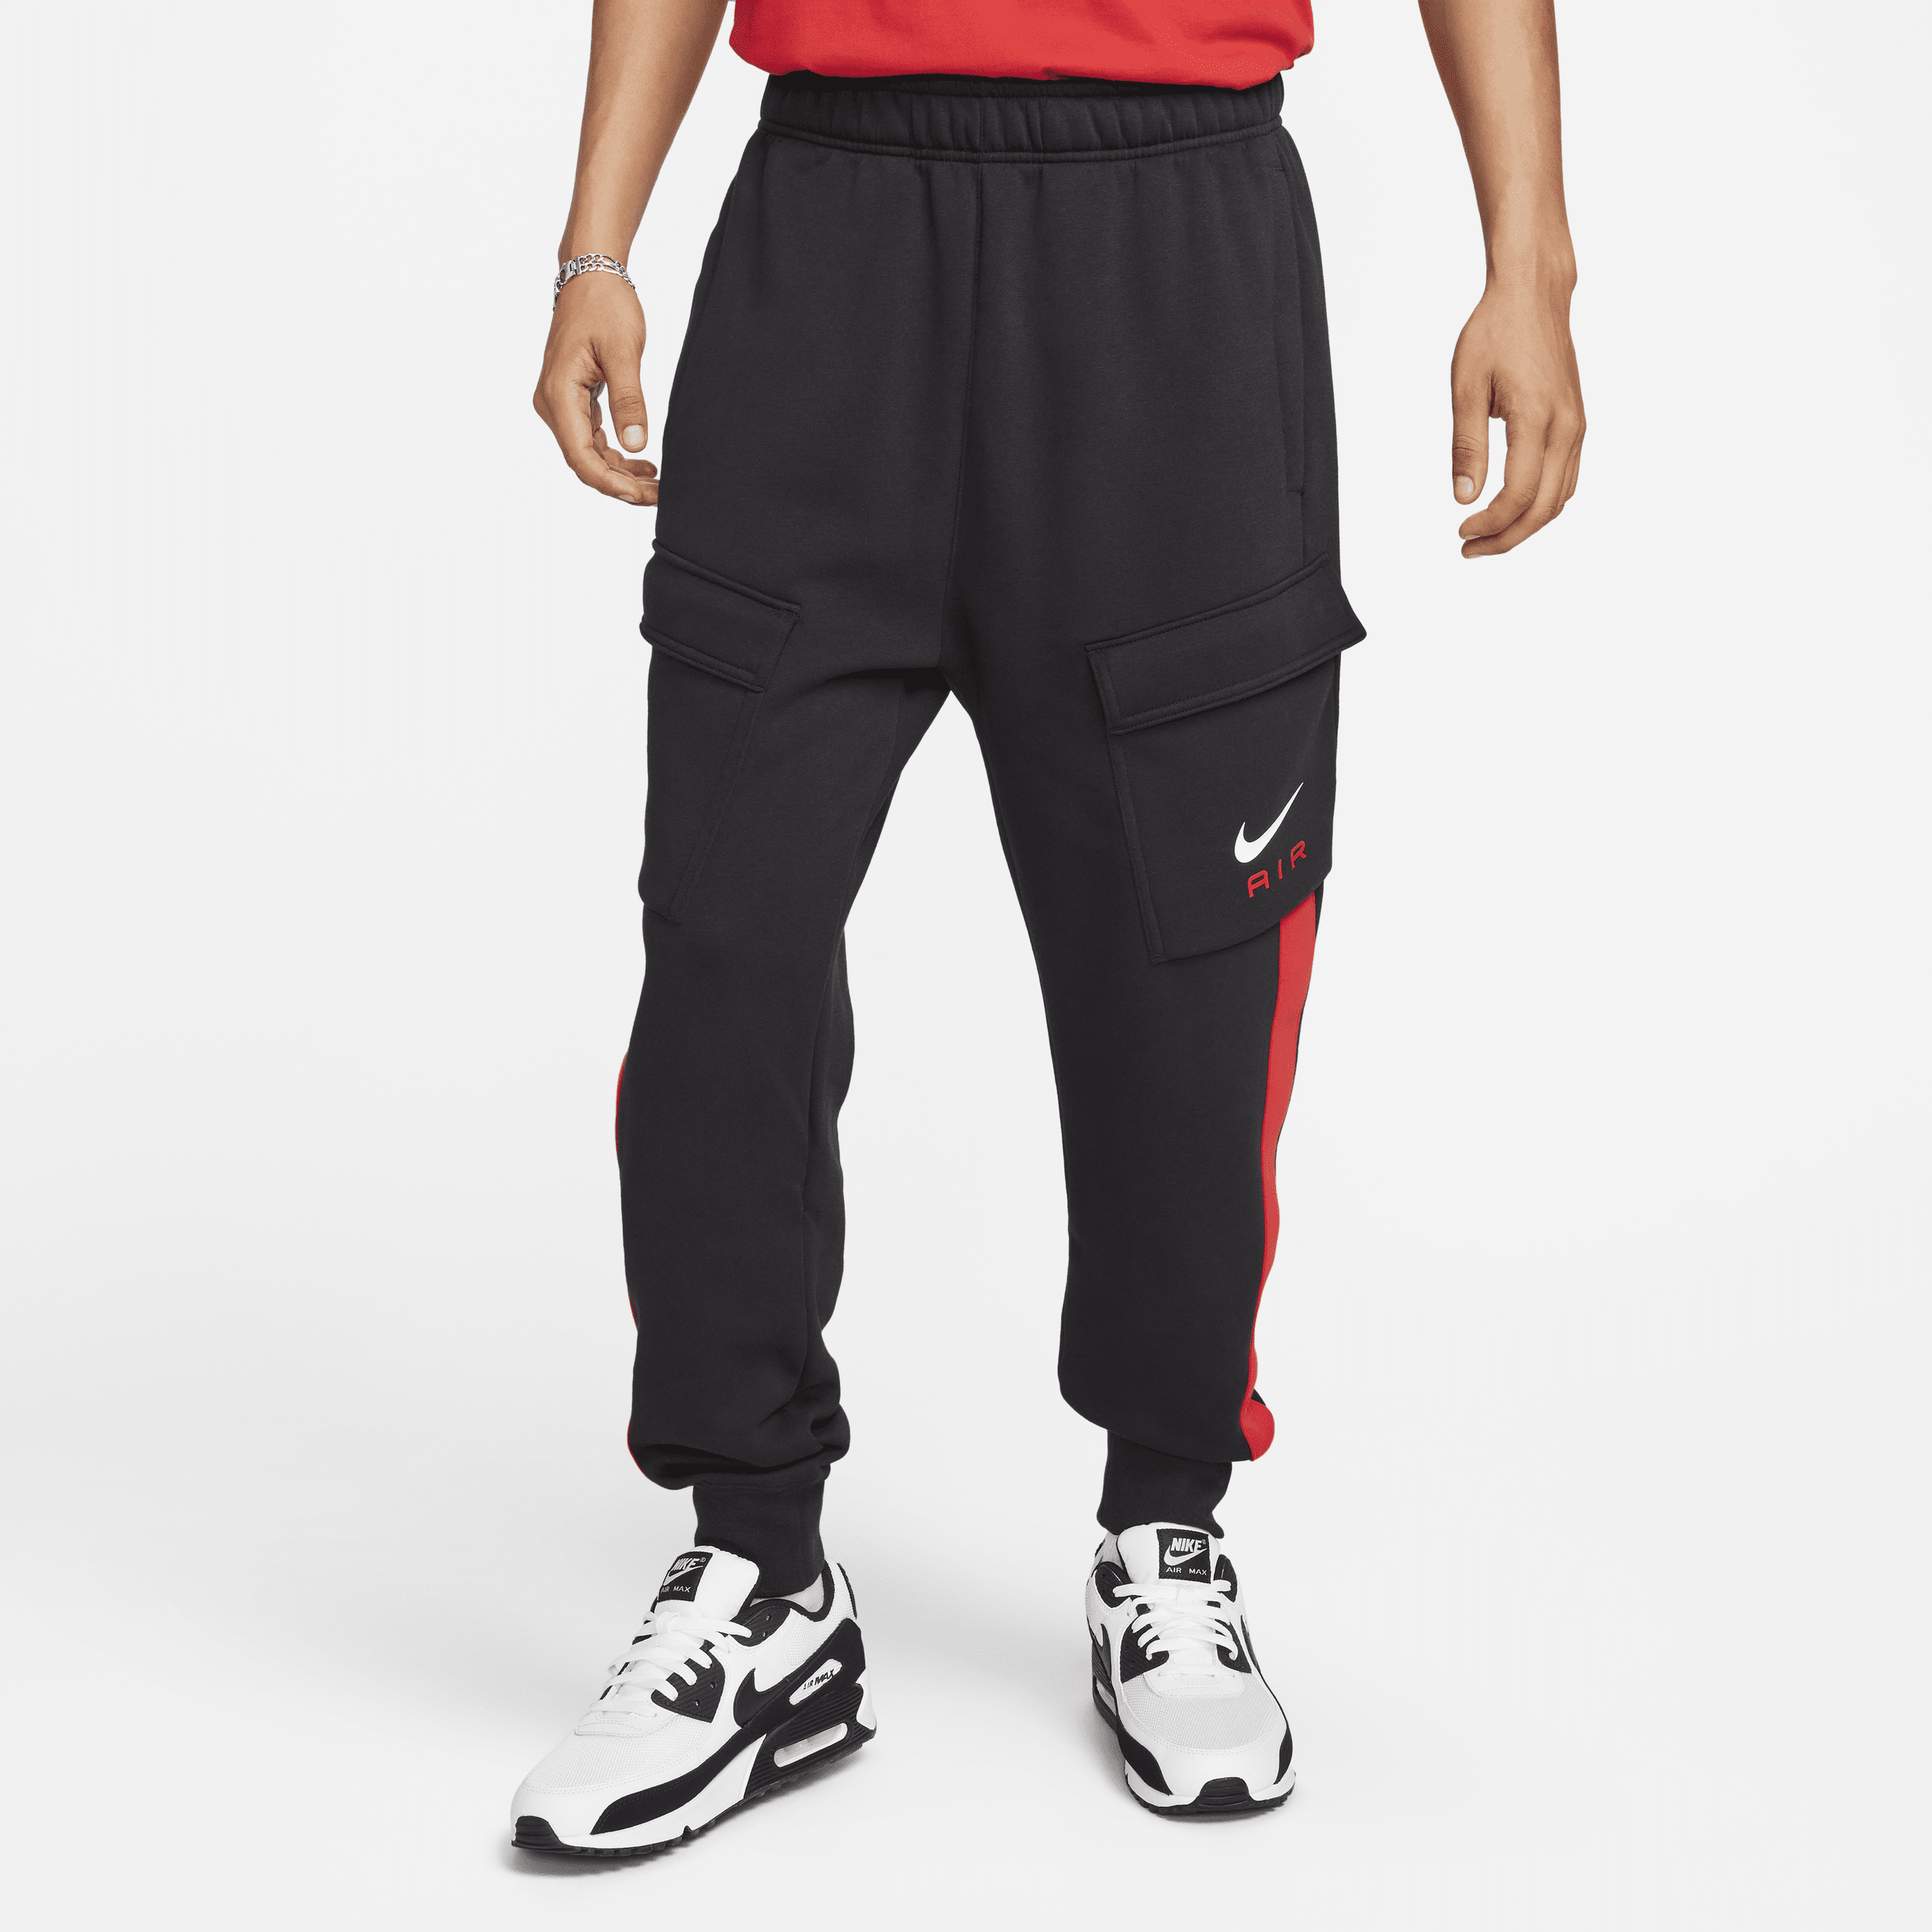 Pantaloni cargo in fleece Nike Air – Uomo - Nero